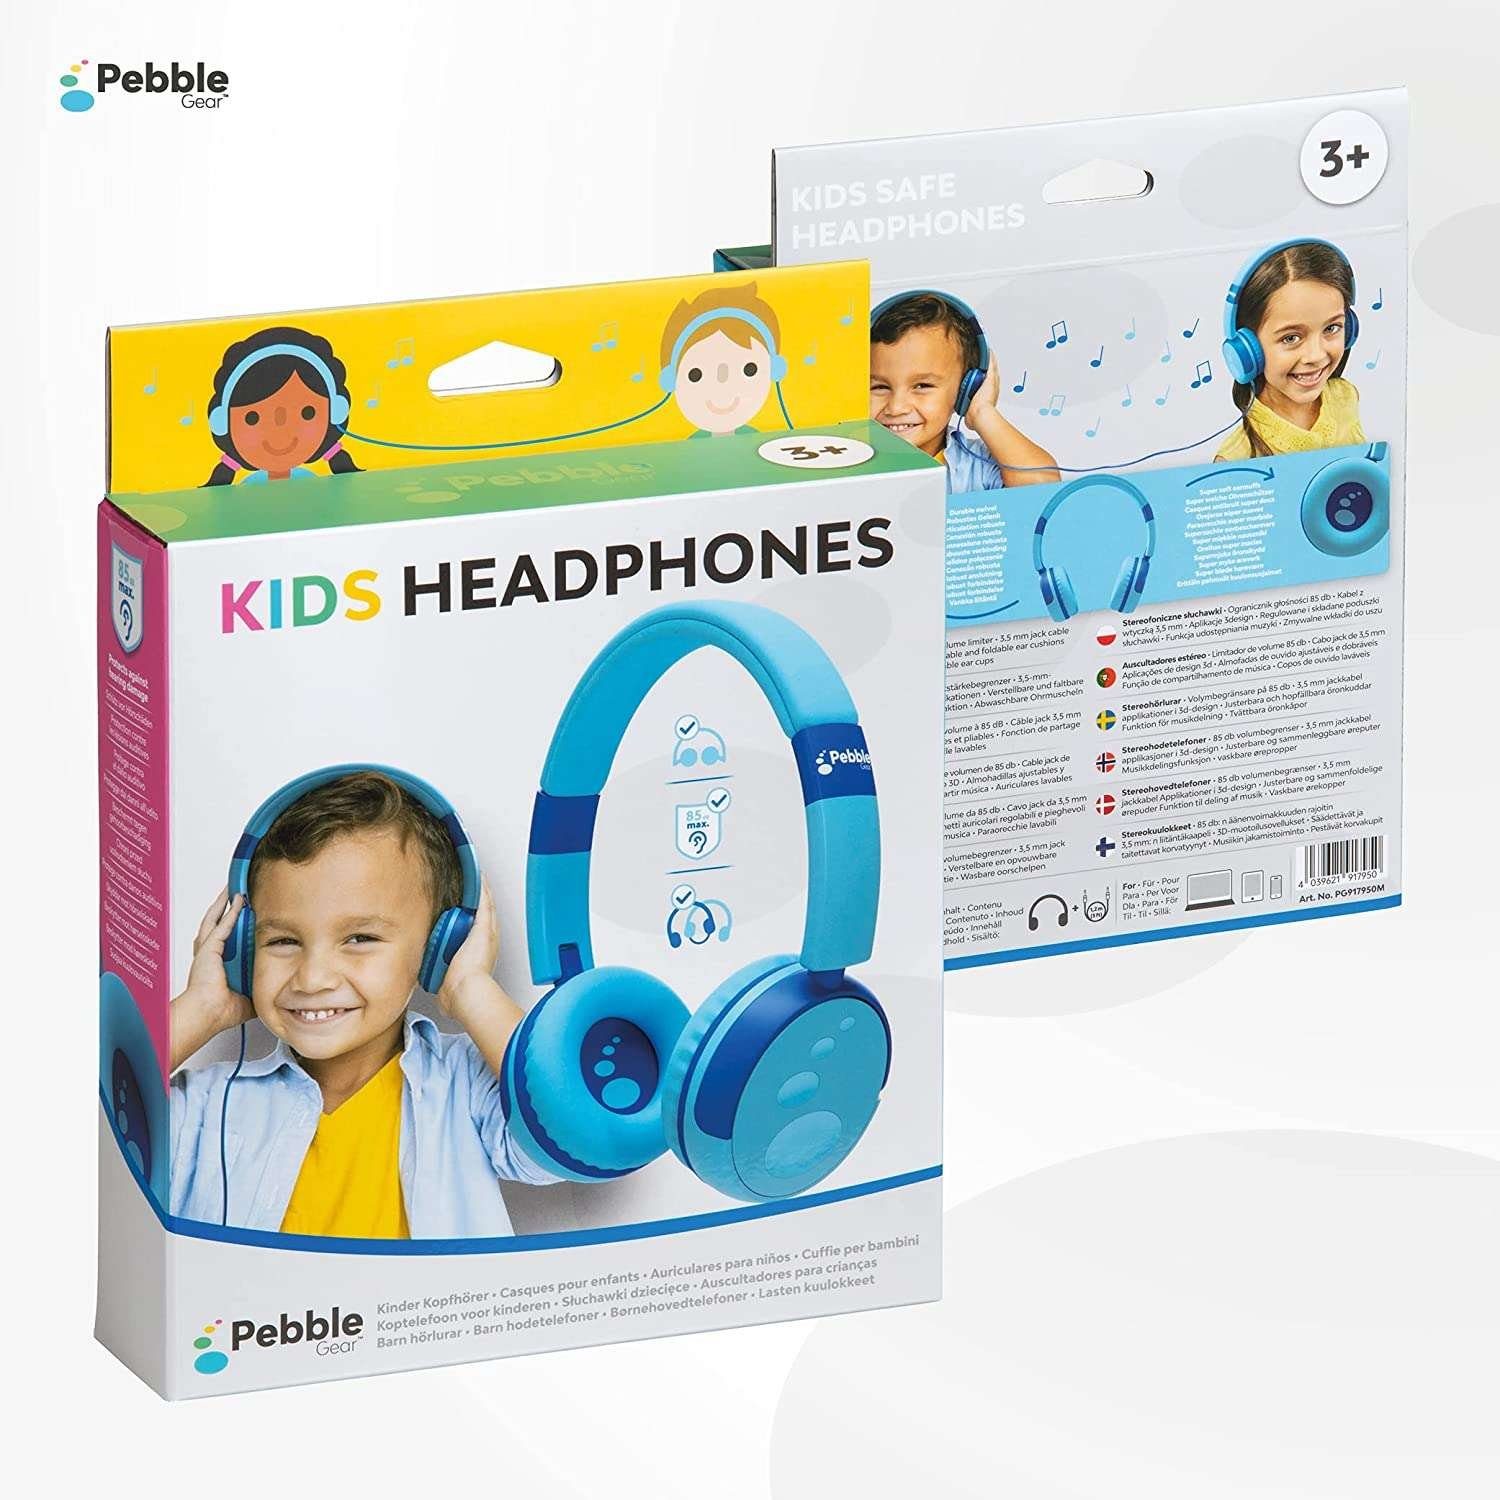 Pebble Gear Kinderkopfhörer pink faltbar, Klinke 85 Kinder-Kopfhörer Lautstärkebegrenzung blau/ (3,5mm Kids-Design) - dB kindersicher